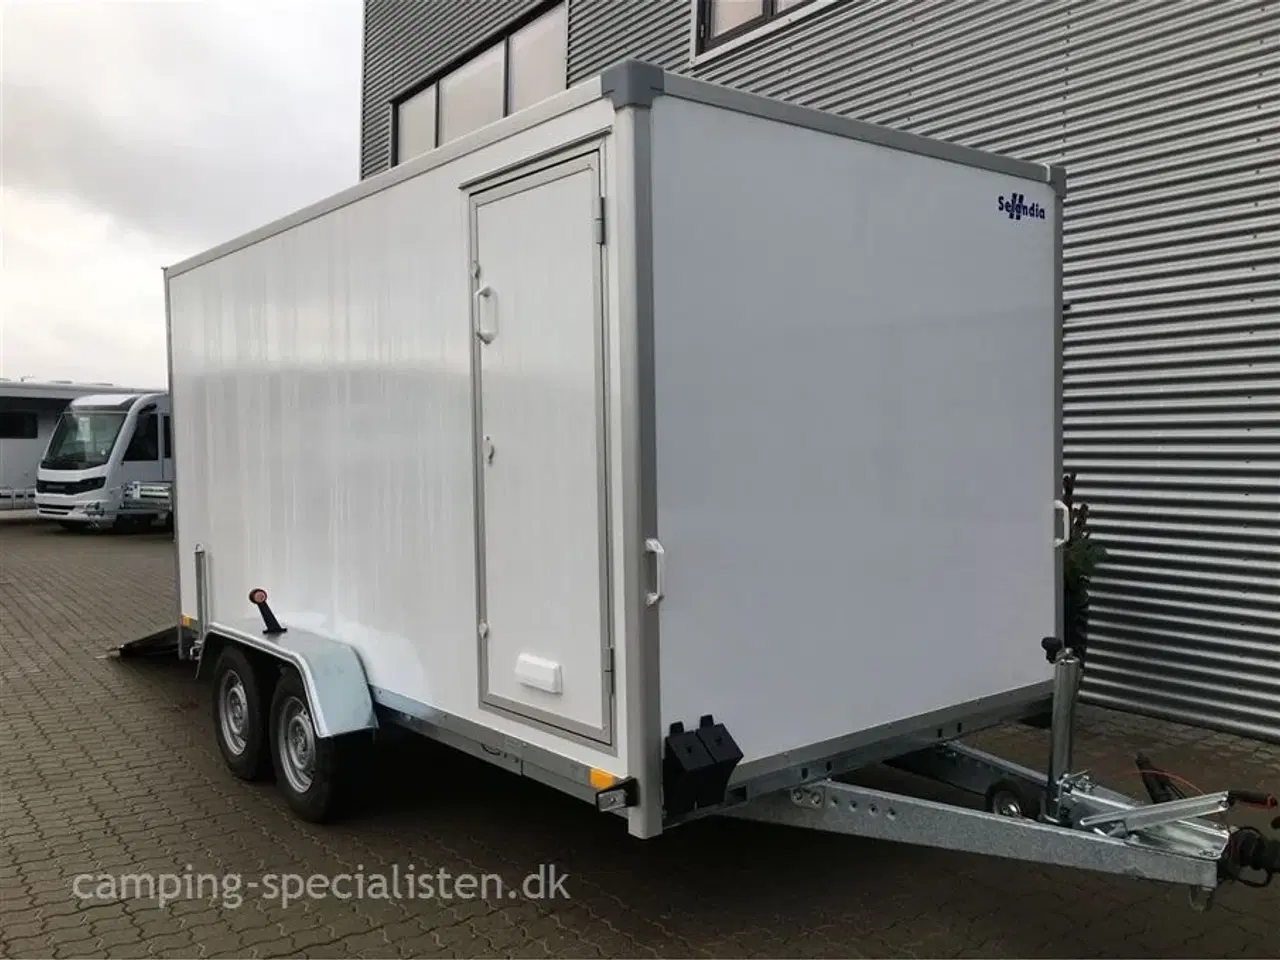 Billede 3 - 2024 - Selandia Cargotrailer Stor 2541 HT 2500 kg    Ny Cargo trailer 2x4 meter Model 2024  Camping-Specialisten.dk Silkeborg og Arhus